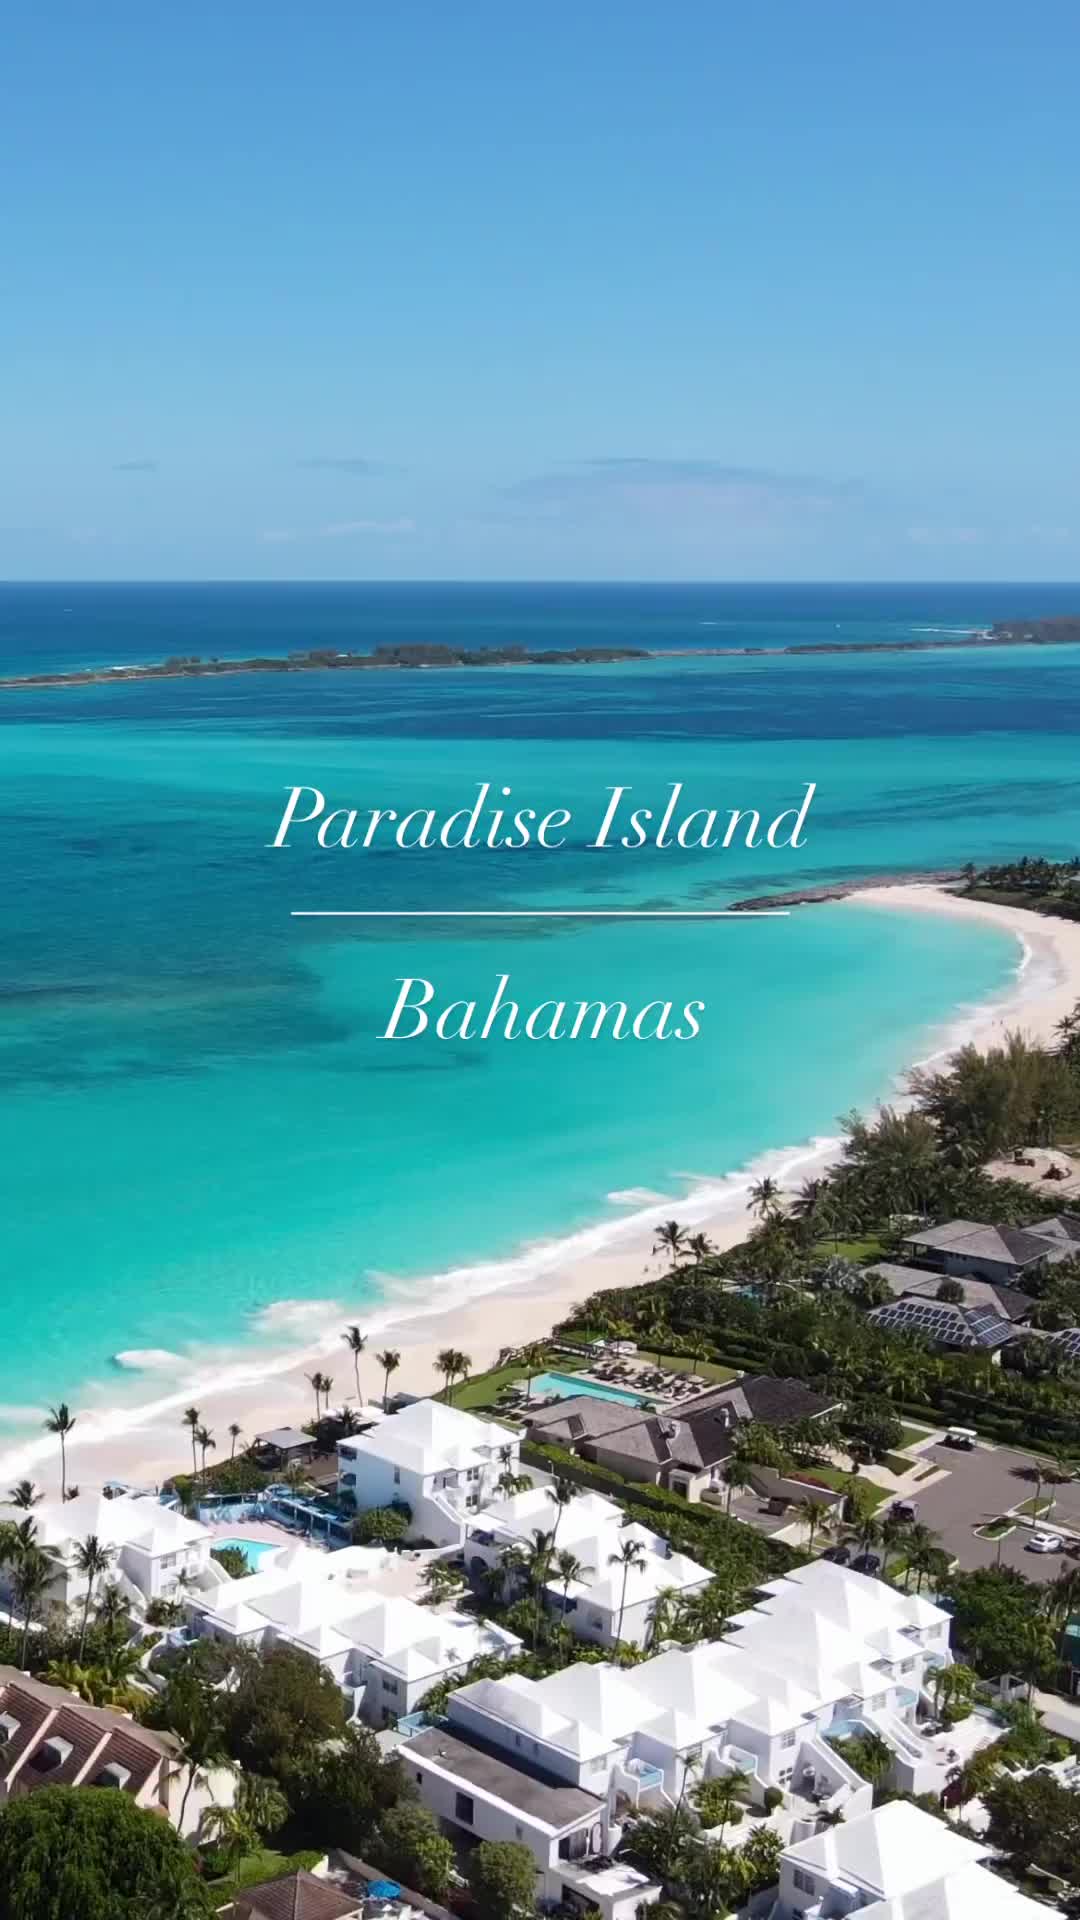 Paradise Island 🇧🇸🇧🇸🇧🇸

Stayed at the beautiful @fsoceanclub 
.
.
.
.
#travel #bahamas #travelblogger #travelphotography #nassau #beaches #dronephotography